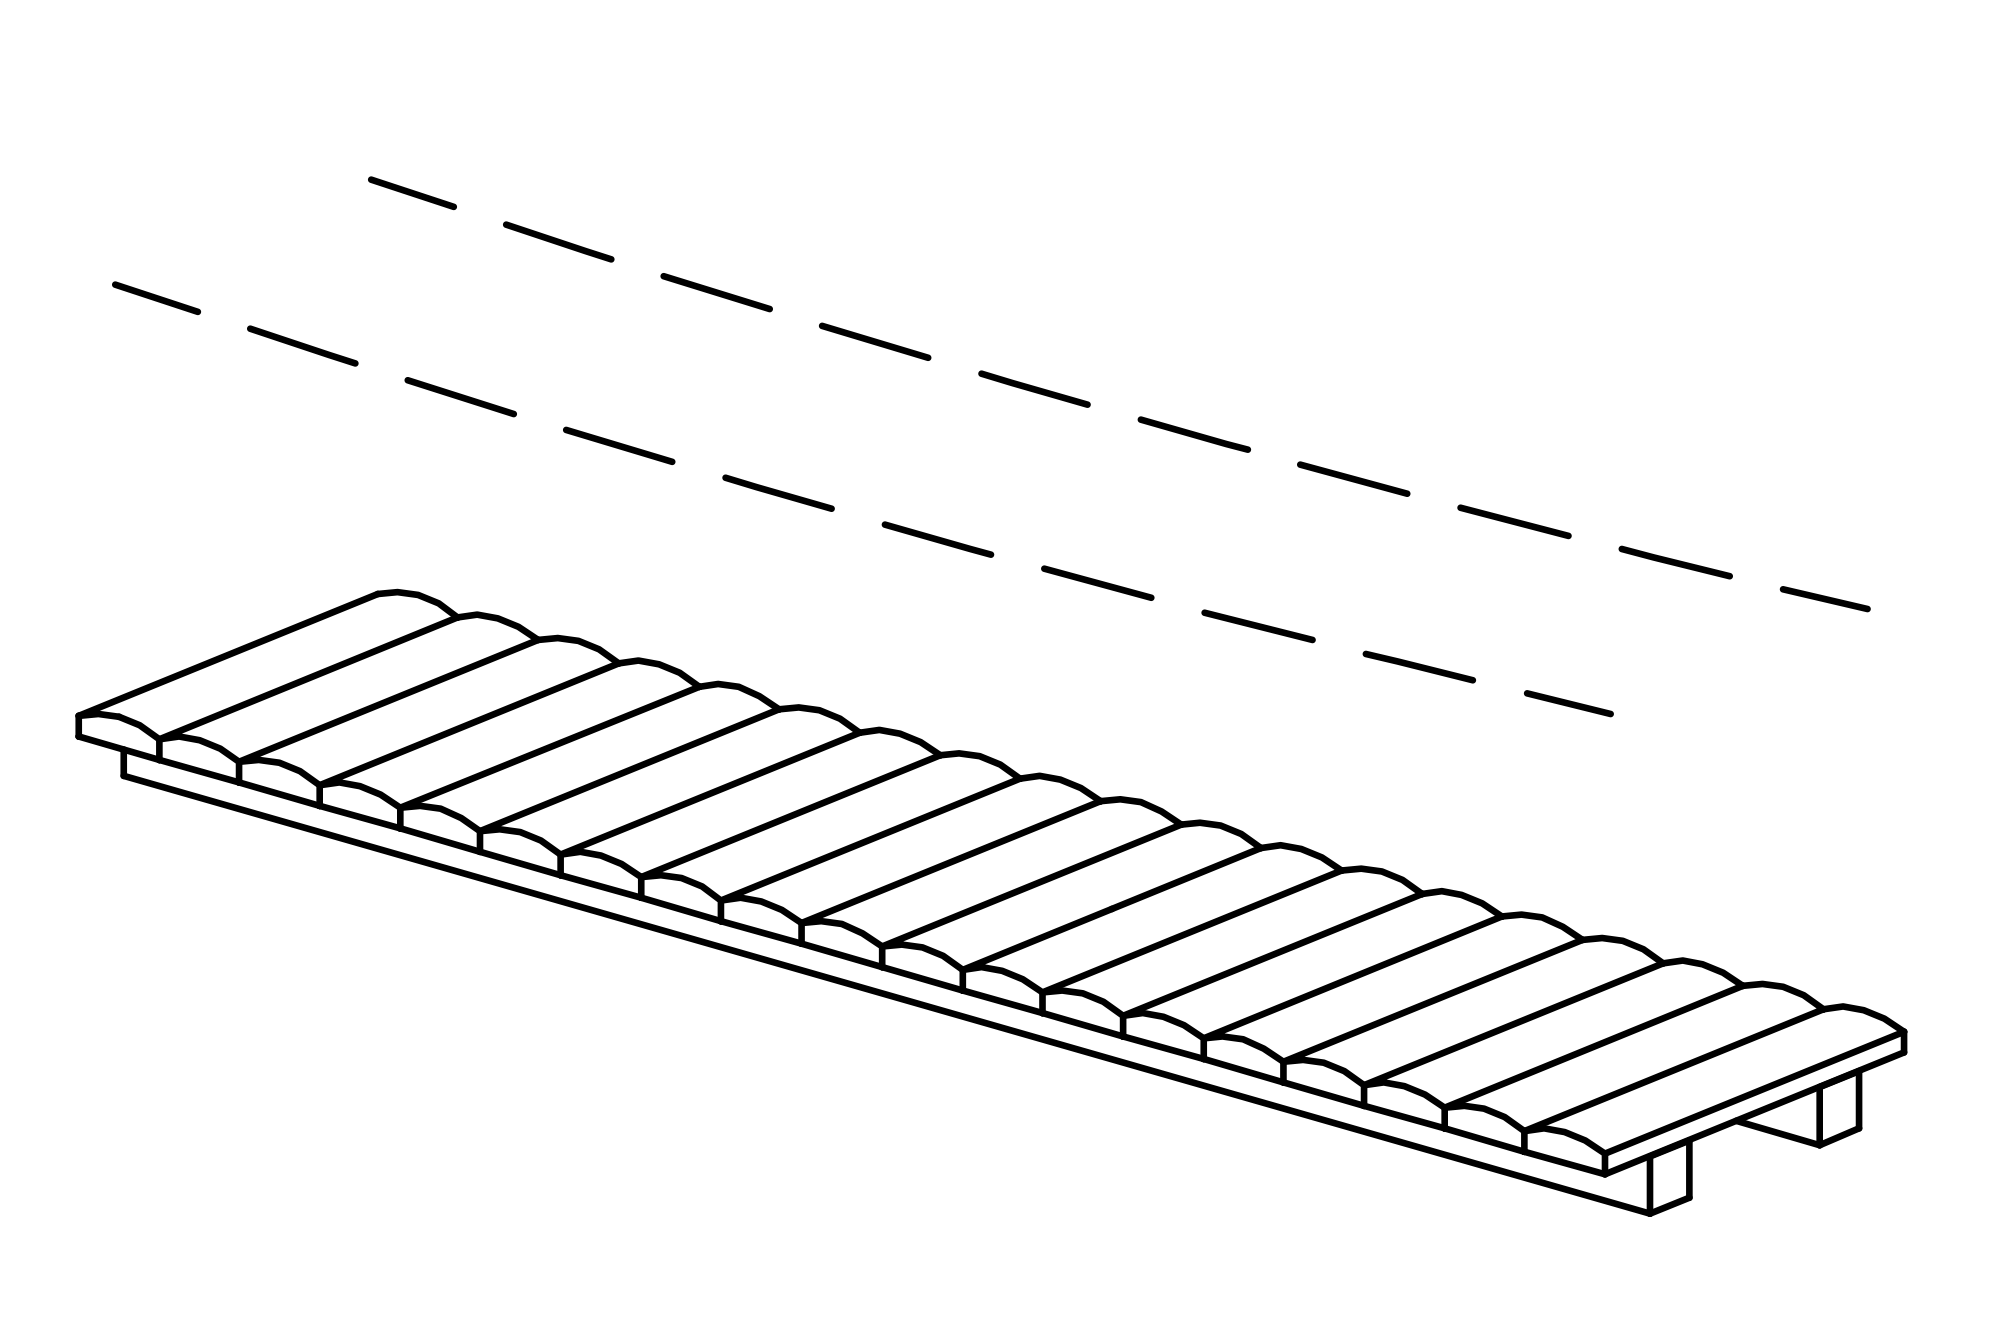 Bridge with chain handrail, length = 3 m